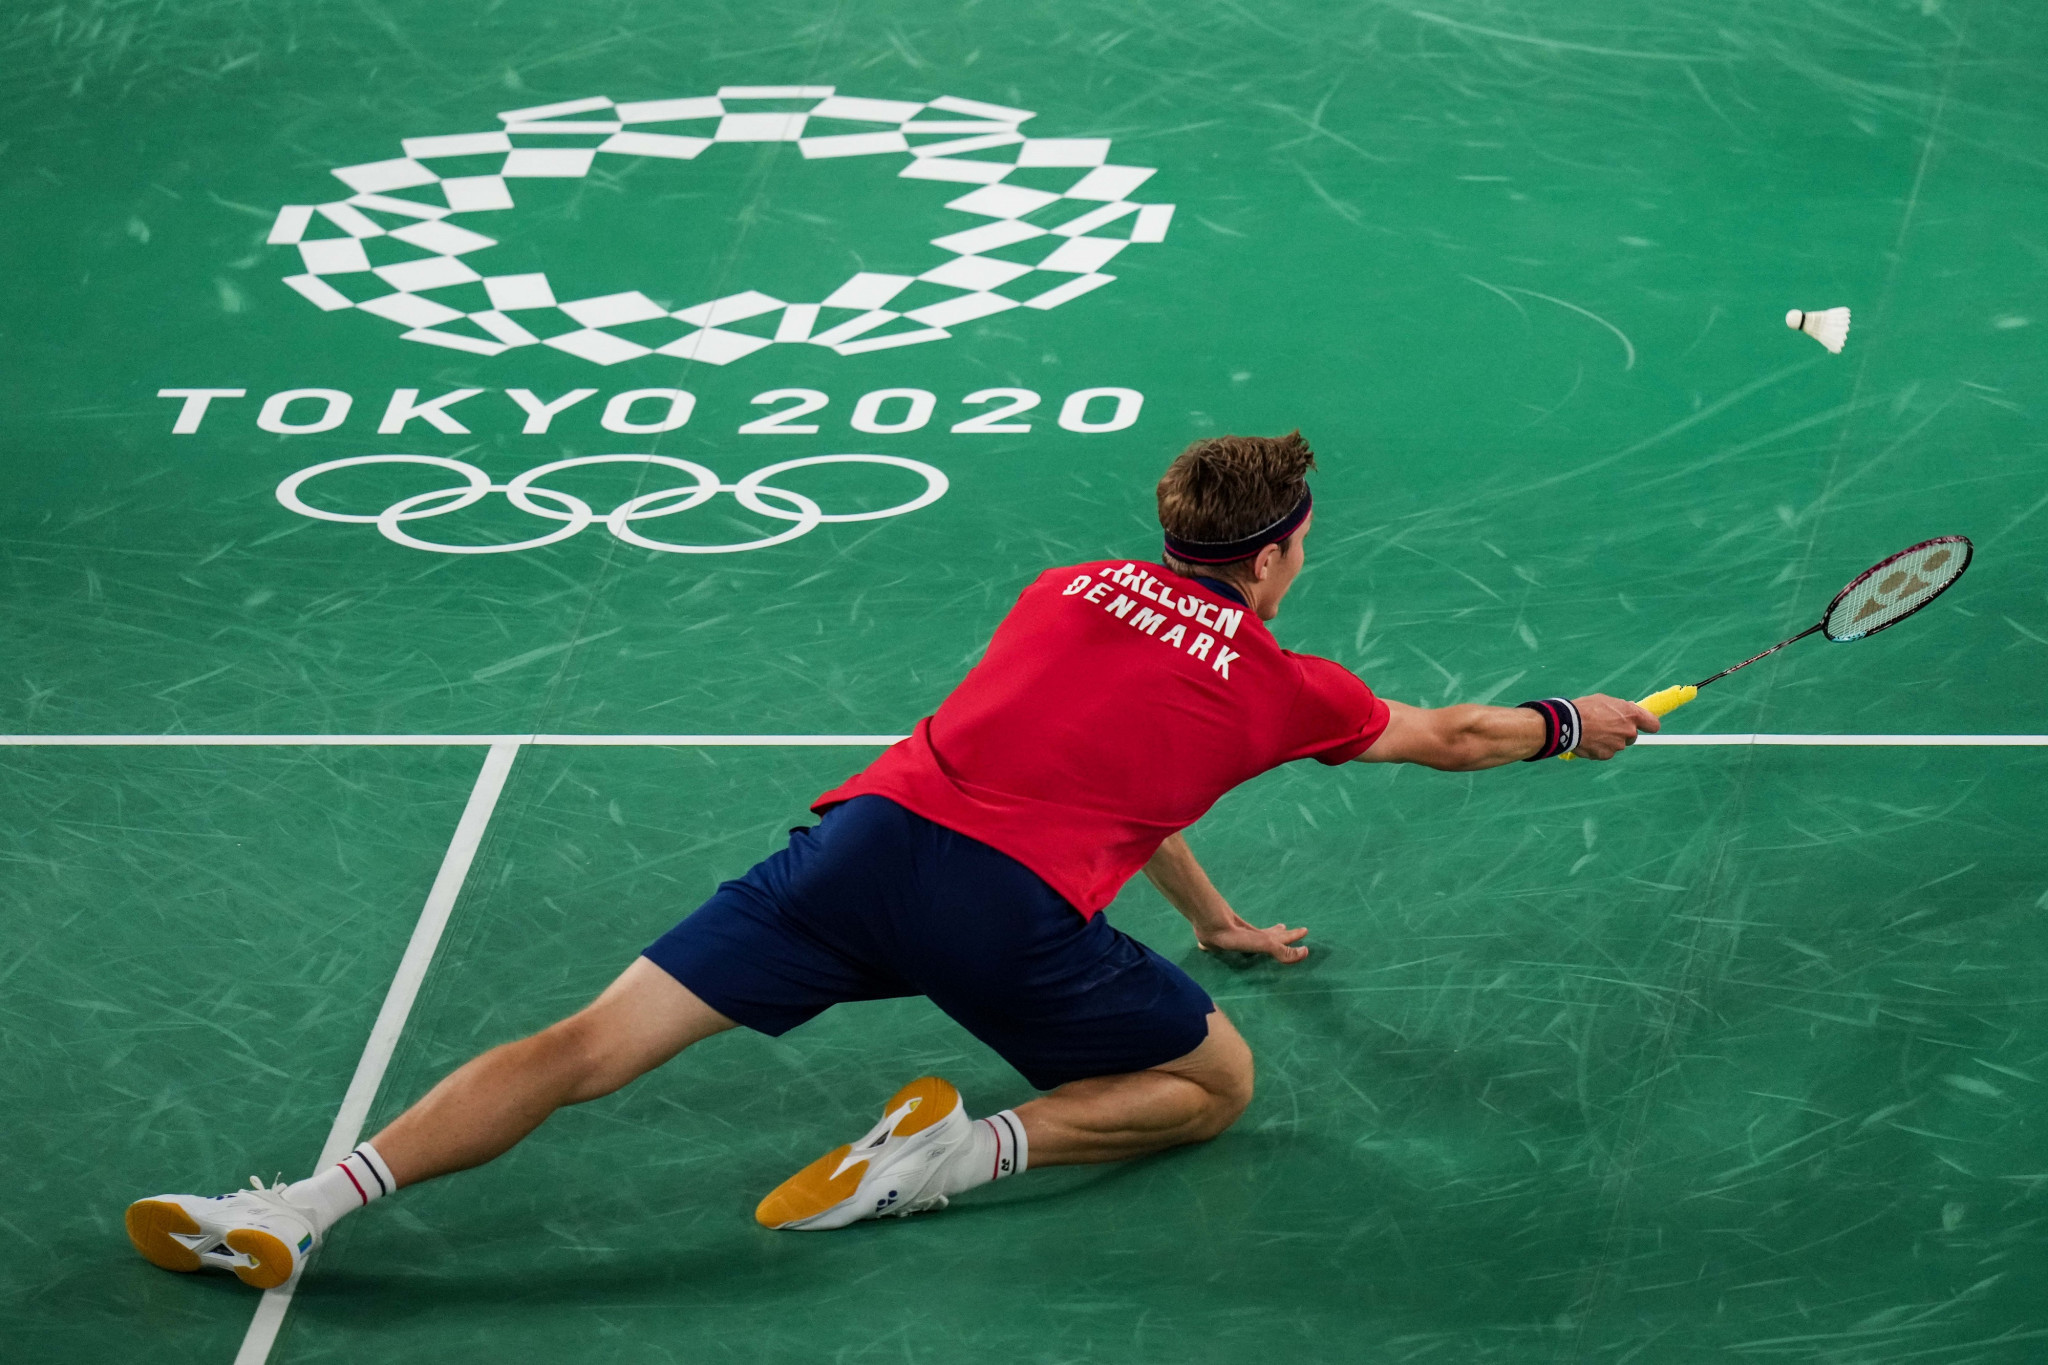 Viktor Axelsen won the last Olympic gold medallist in Tokyo 2020. Photo: BWF